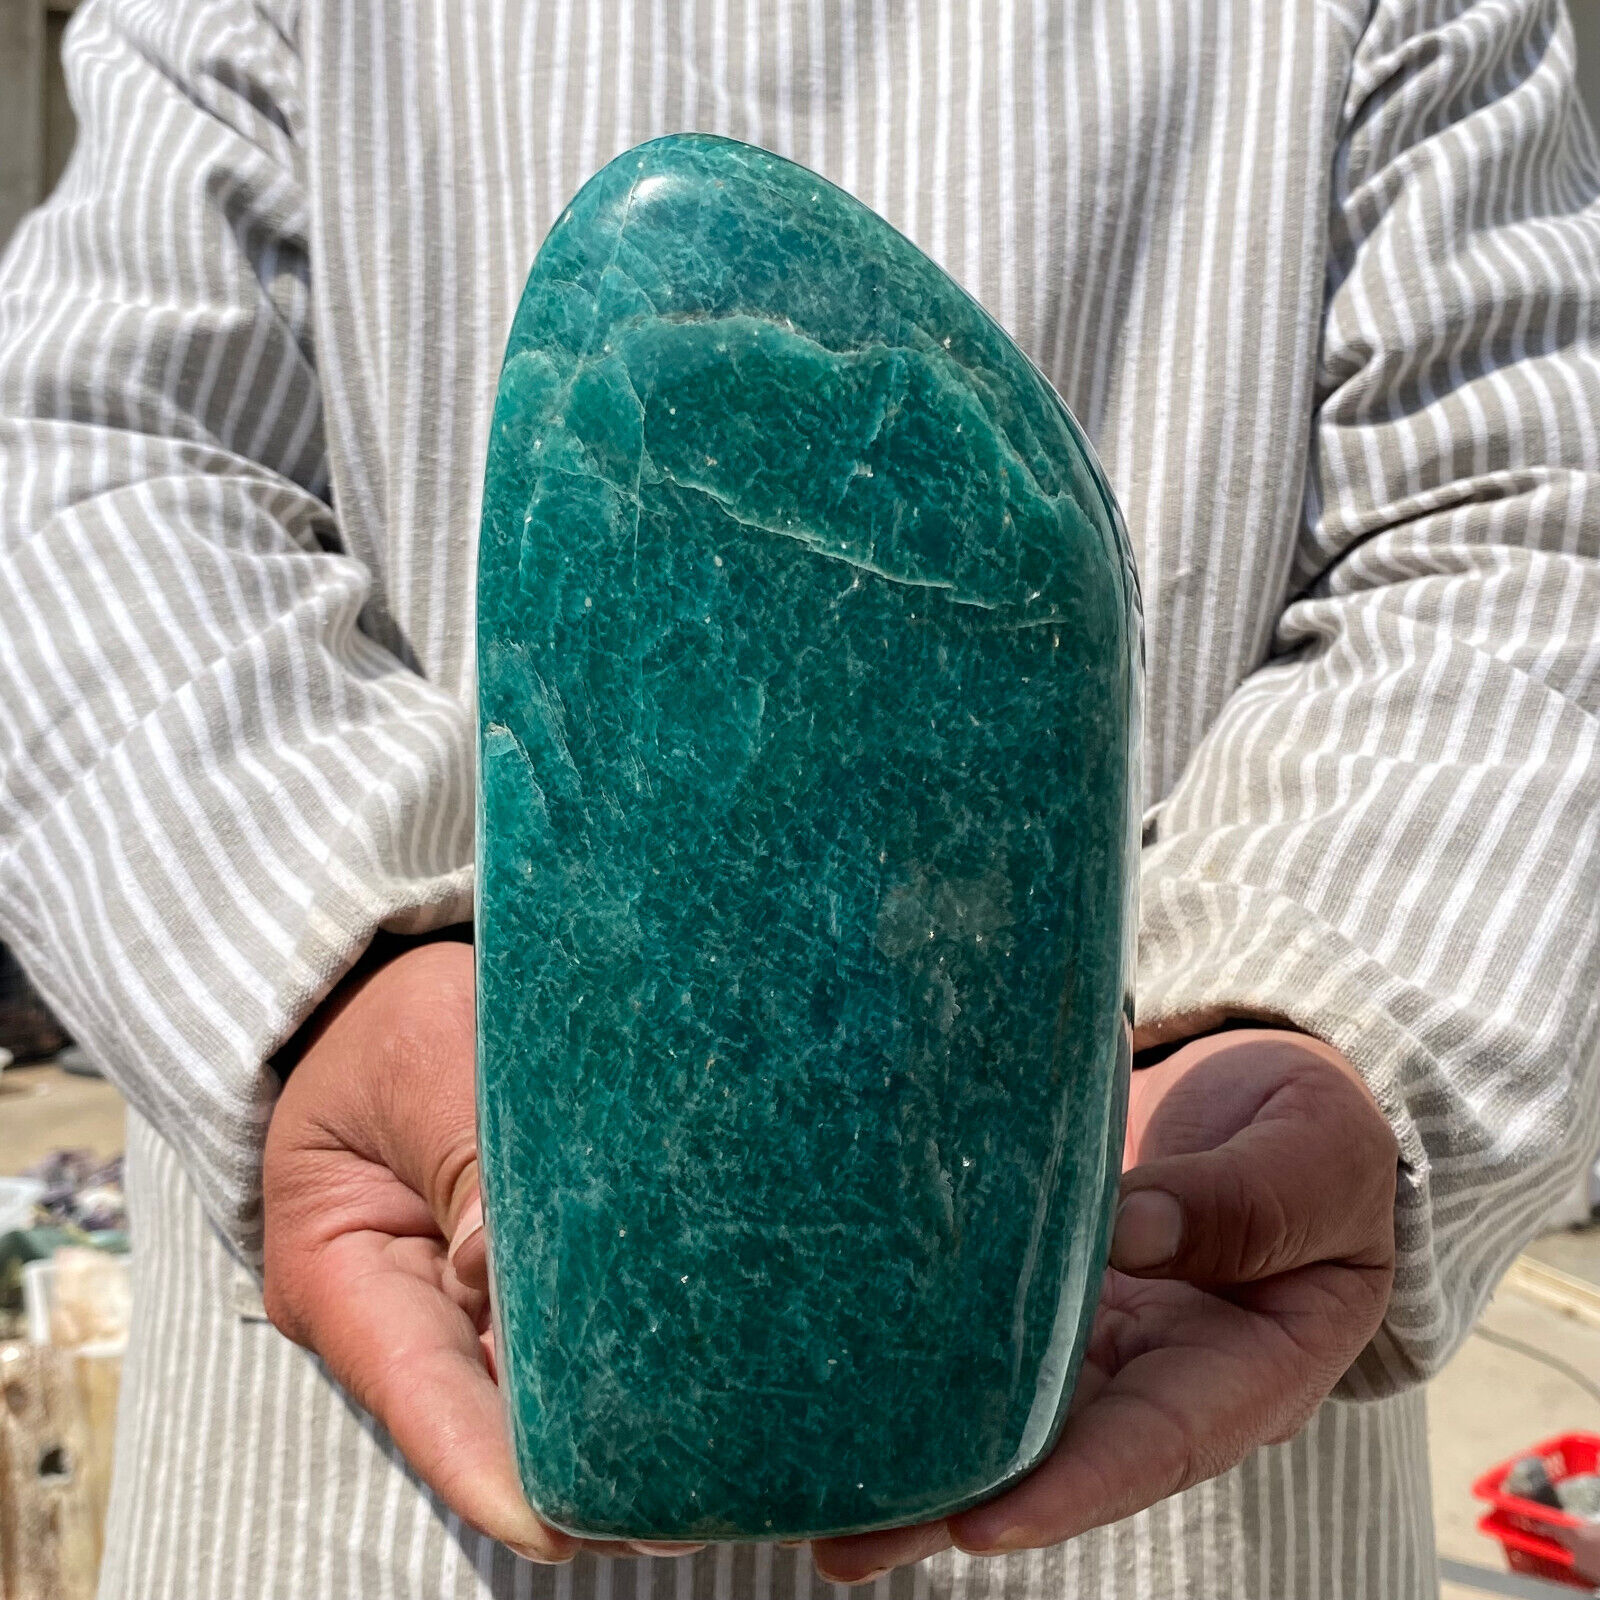 3.4kg Natural Blue Green Starlight Amazonite Crystal Healing Display Specimen